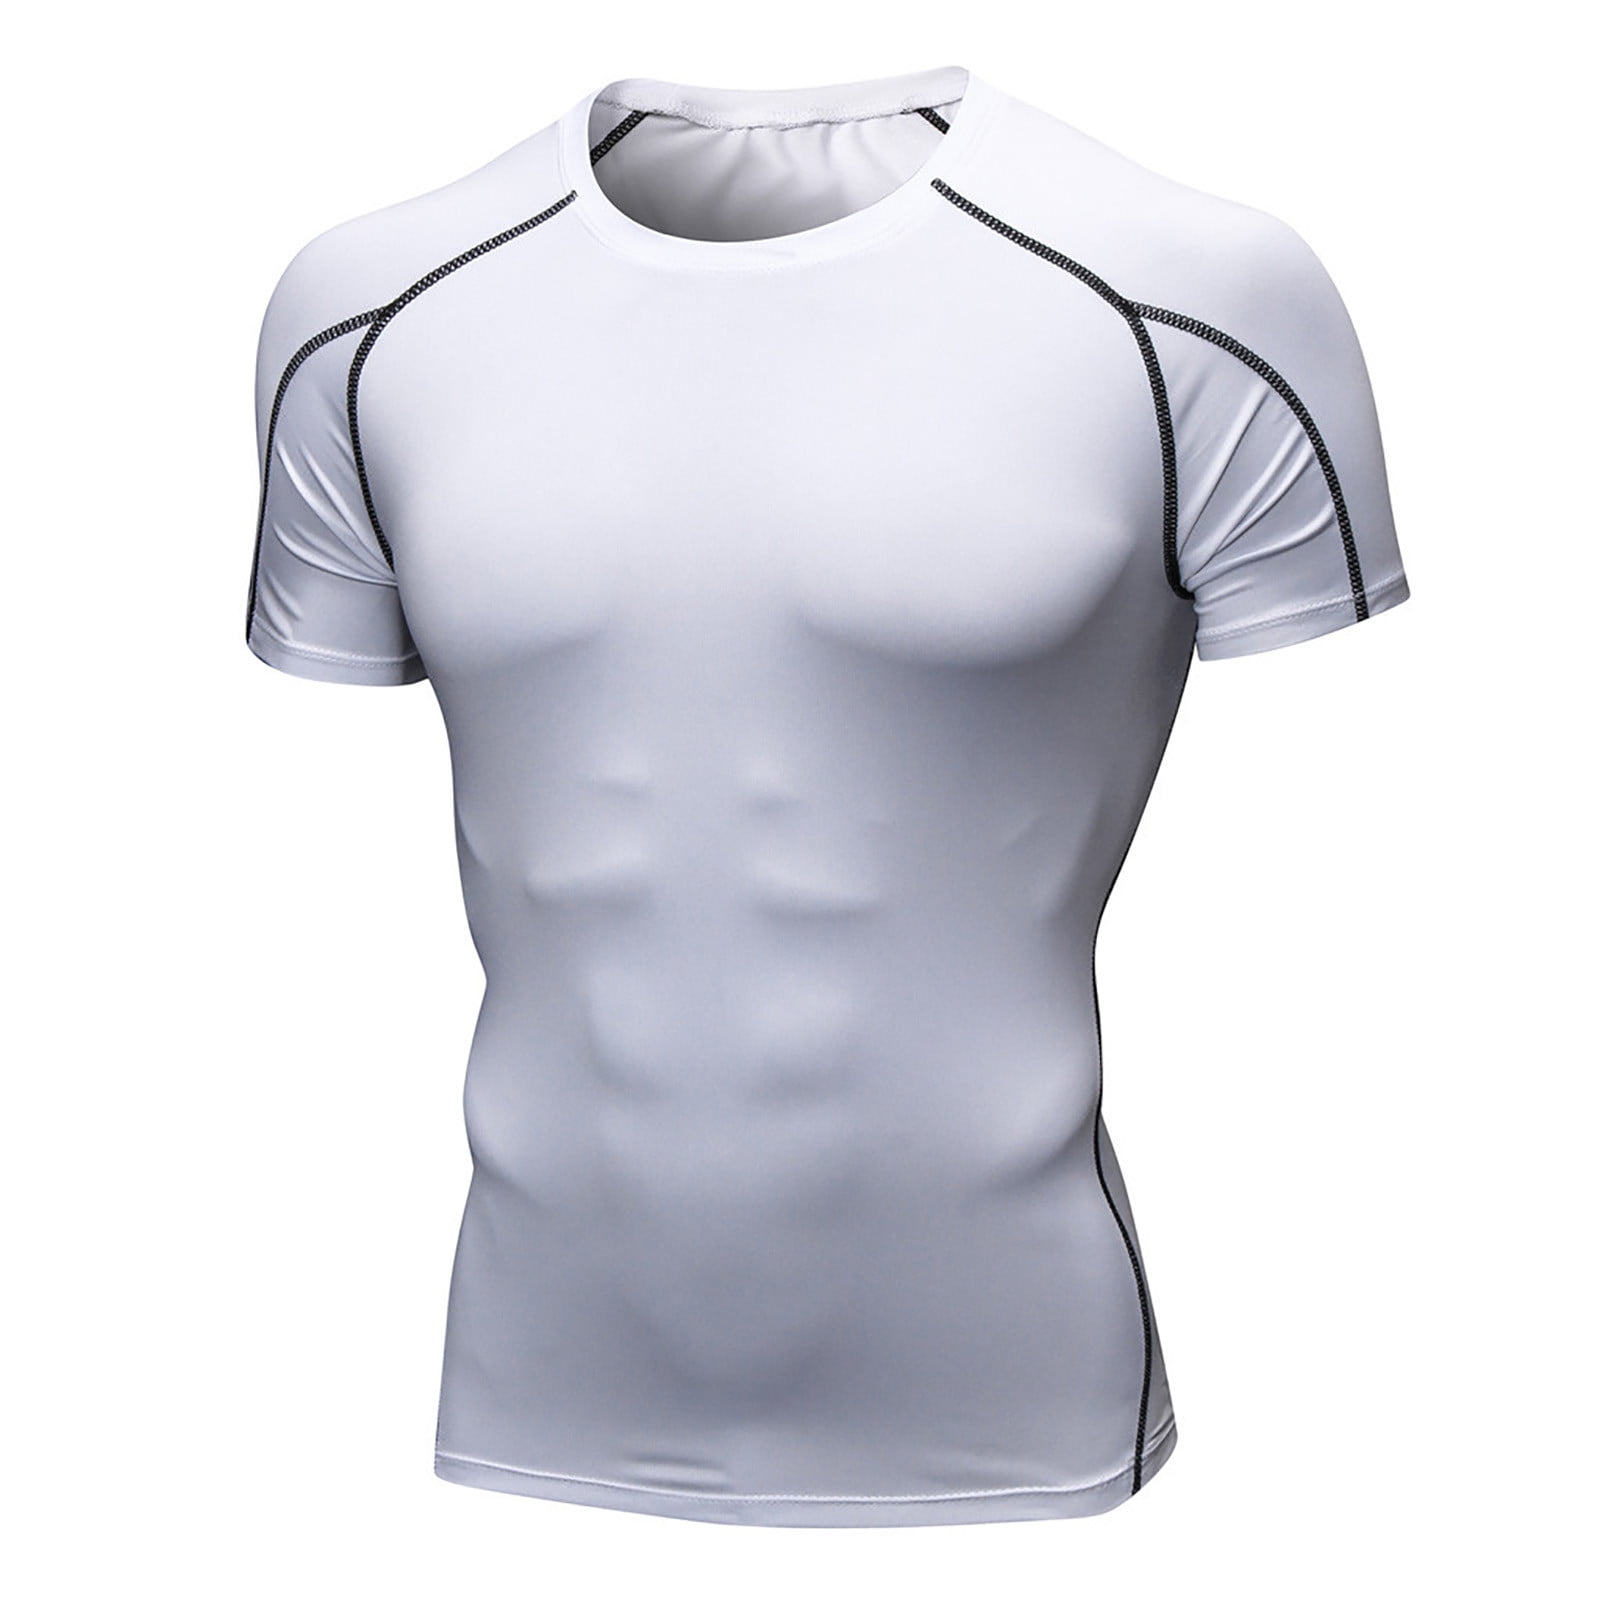 YYDGH Workout Shirts for Men Quick Dry Moisture Wicking T-Shirts Raglan ...